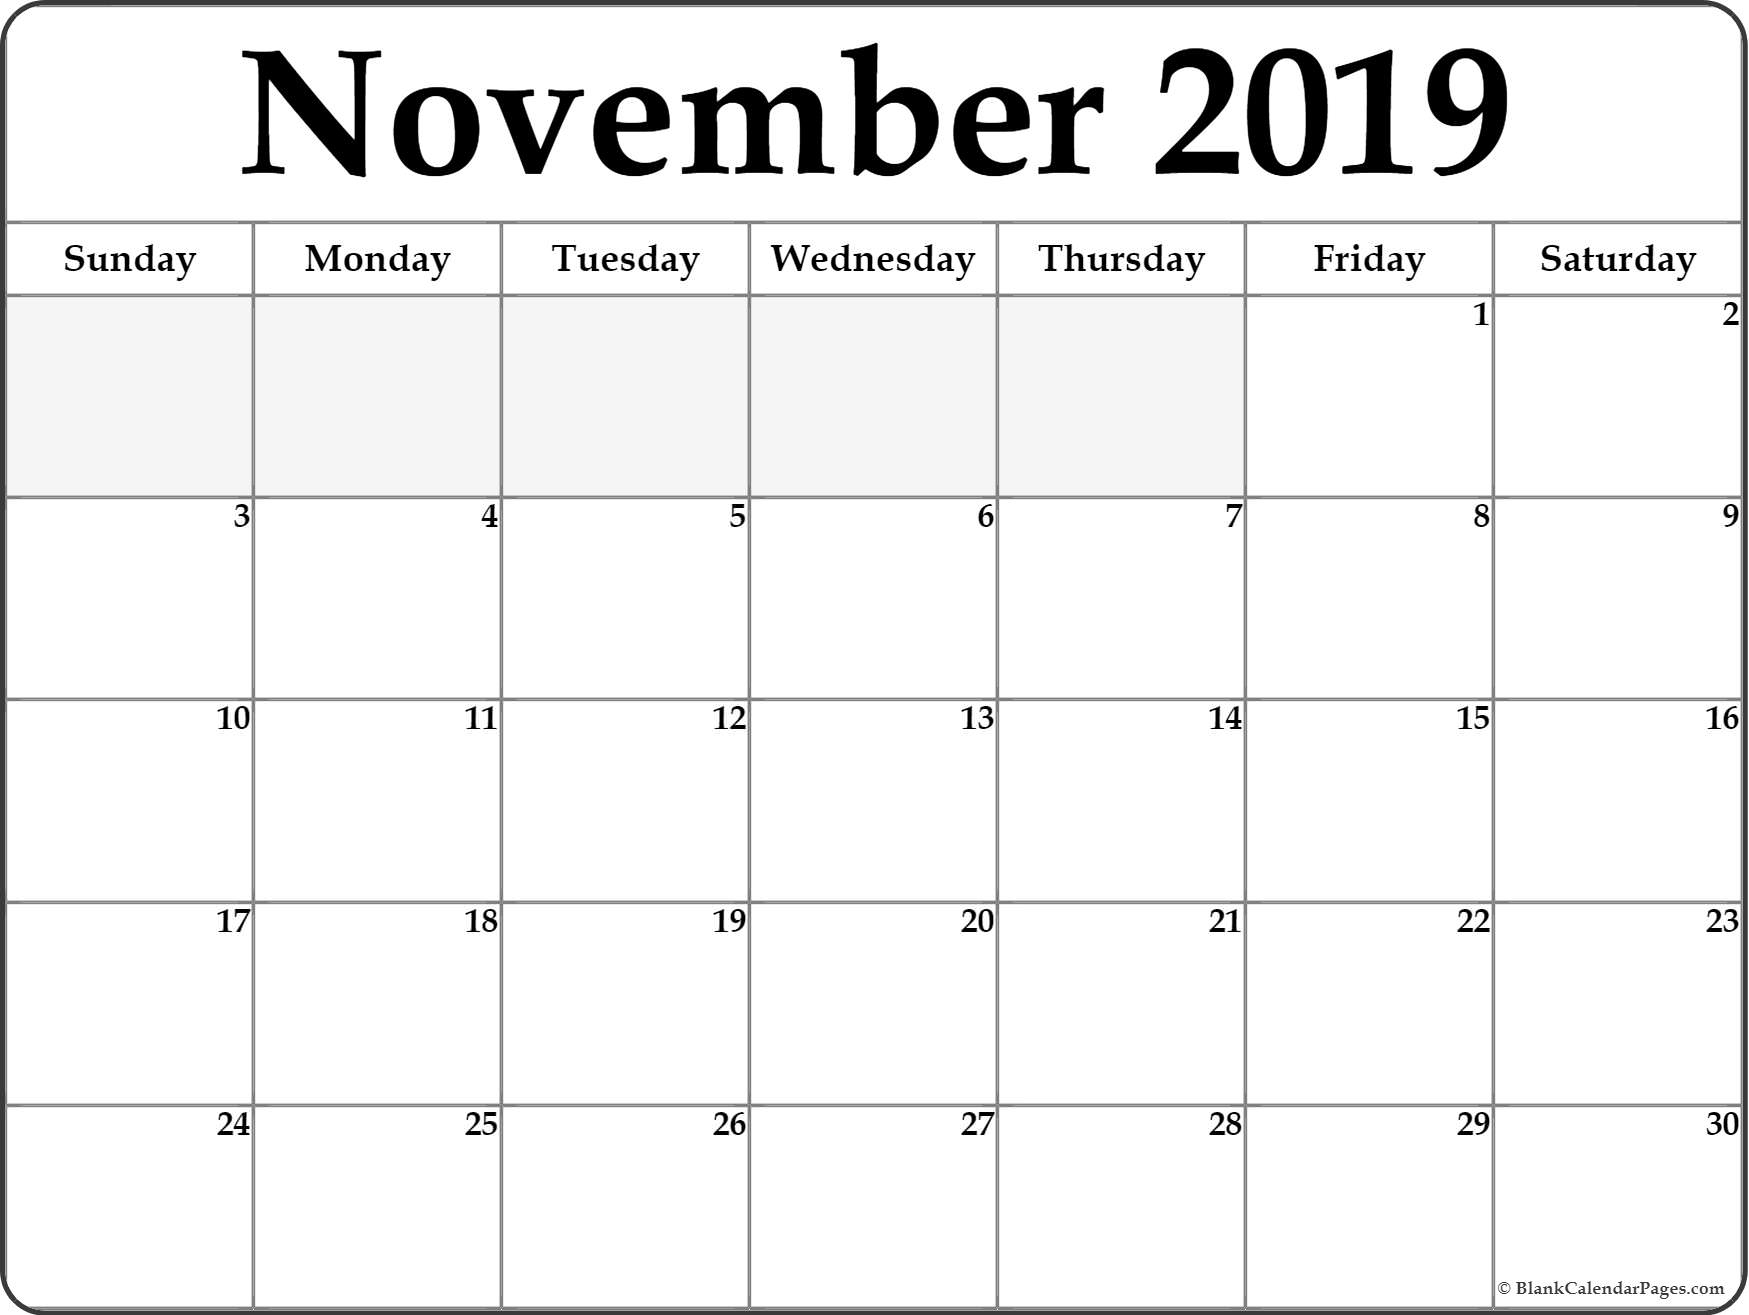 November 2019 Calendar | Free Printable Monthly Calendars